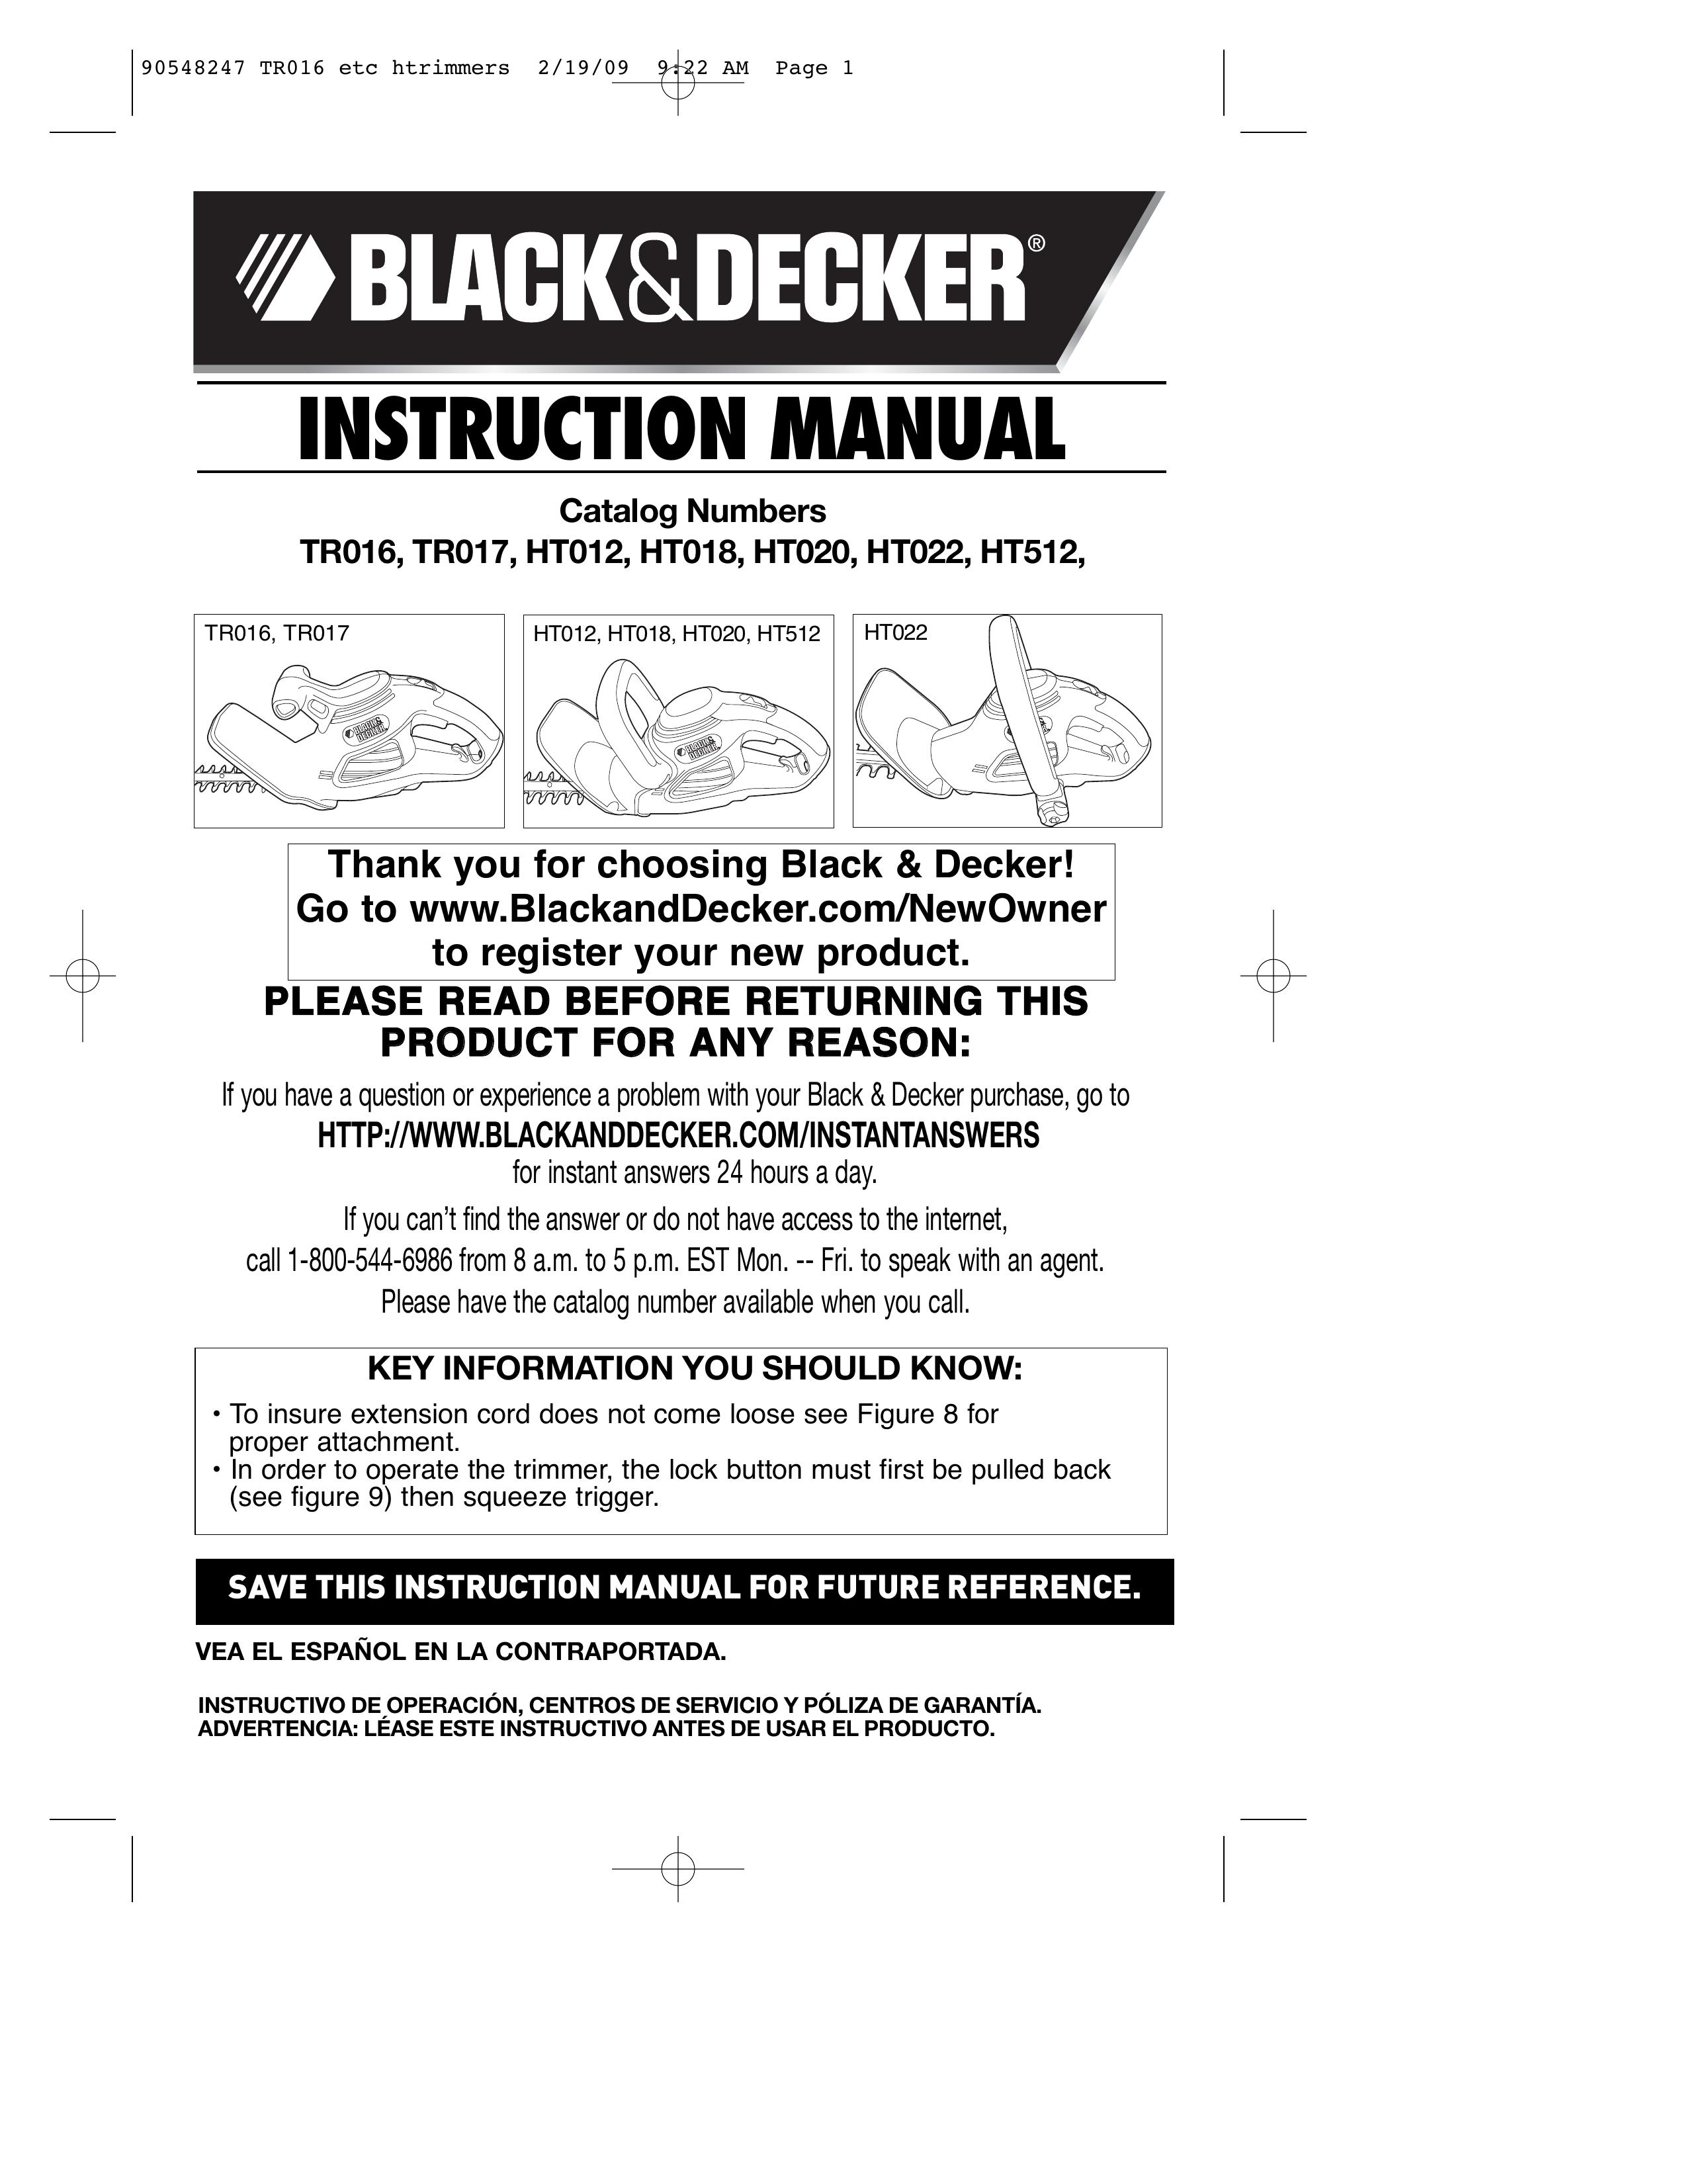 Black & Decker 90548247 Trimmer User Manual